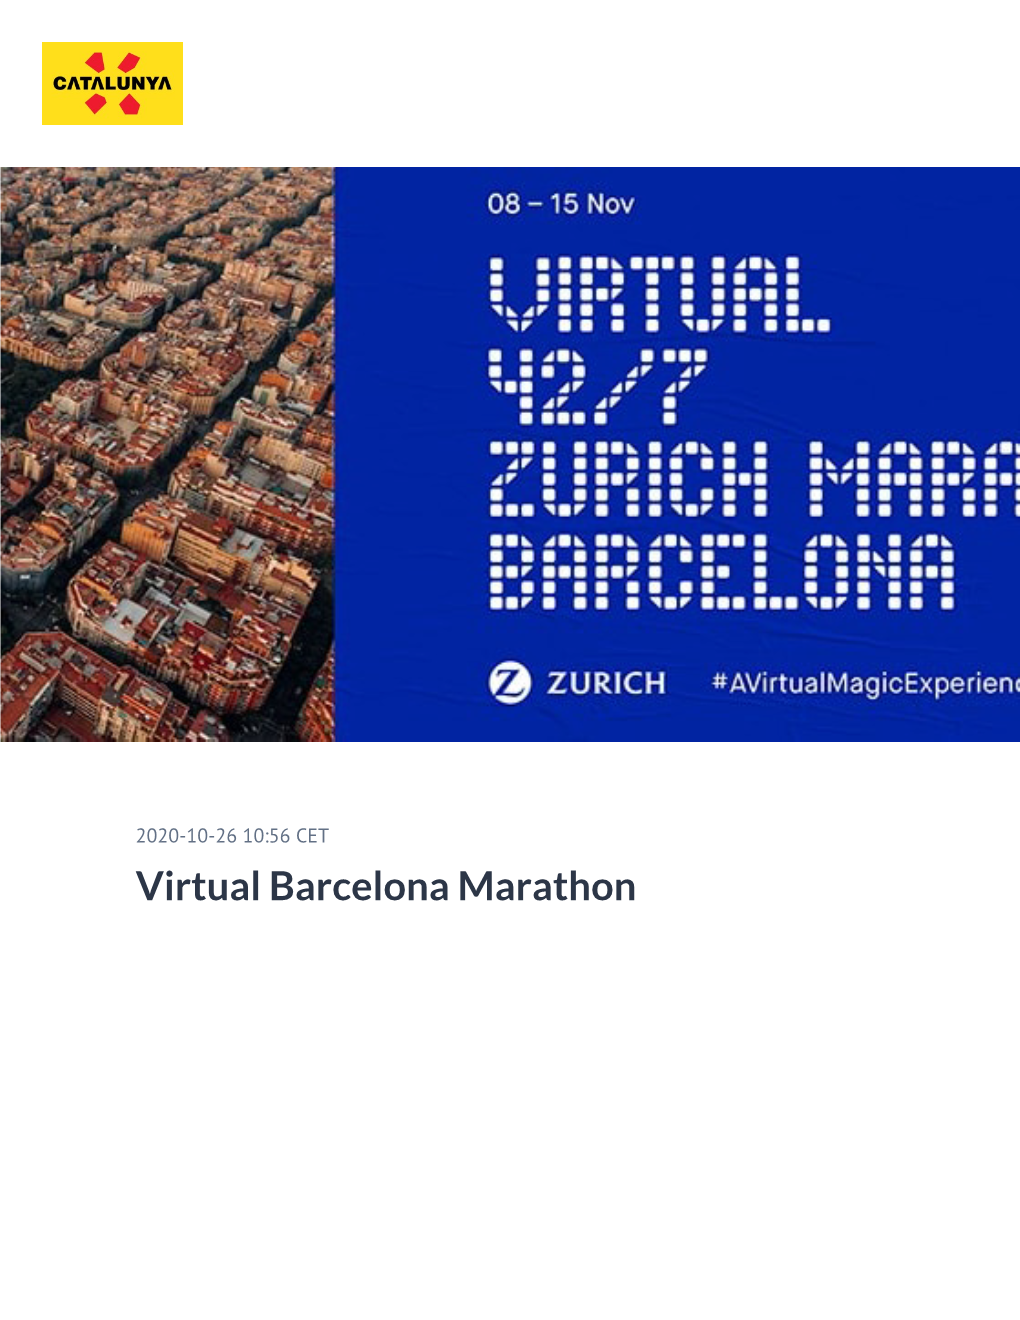 Virtual Barcelona Marathon